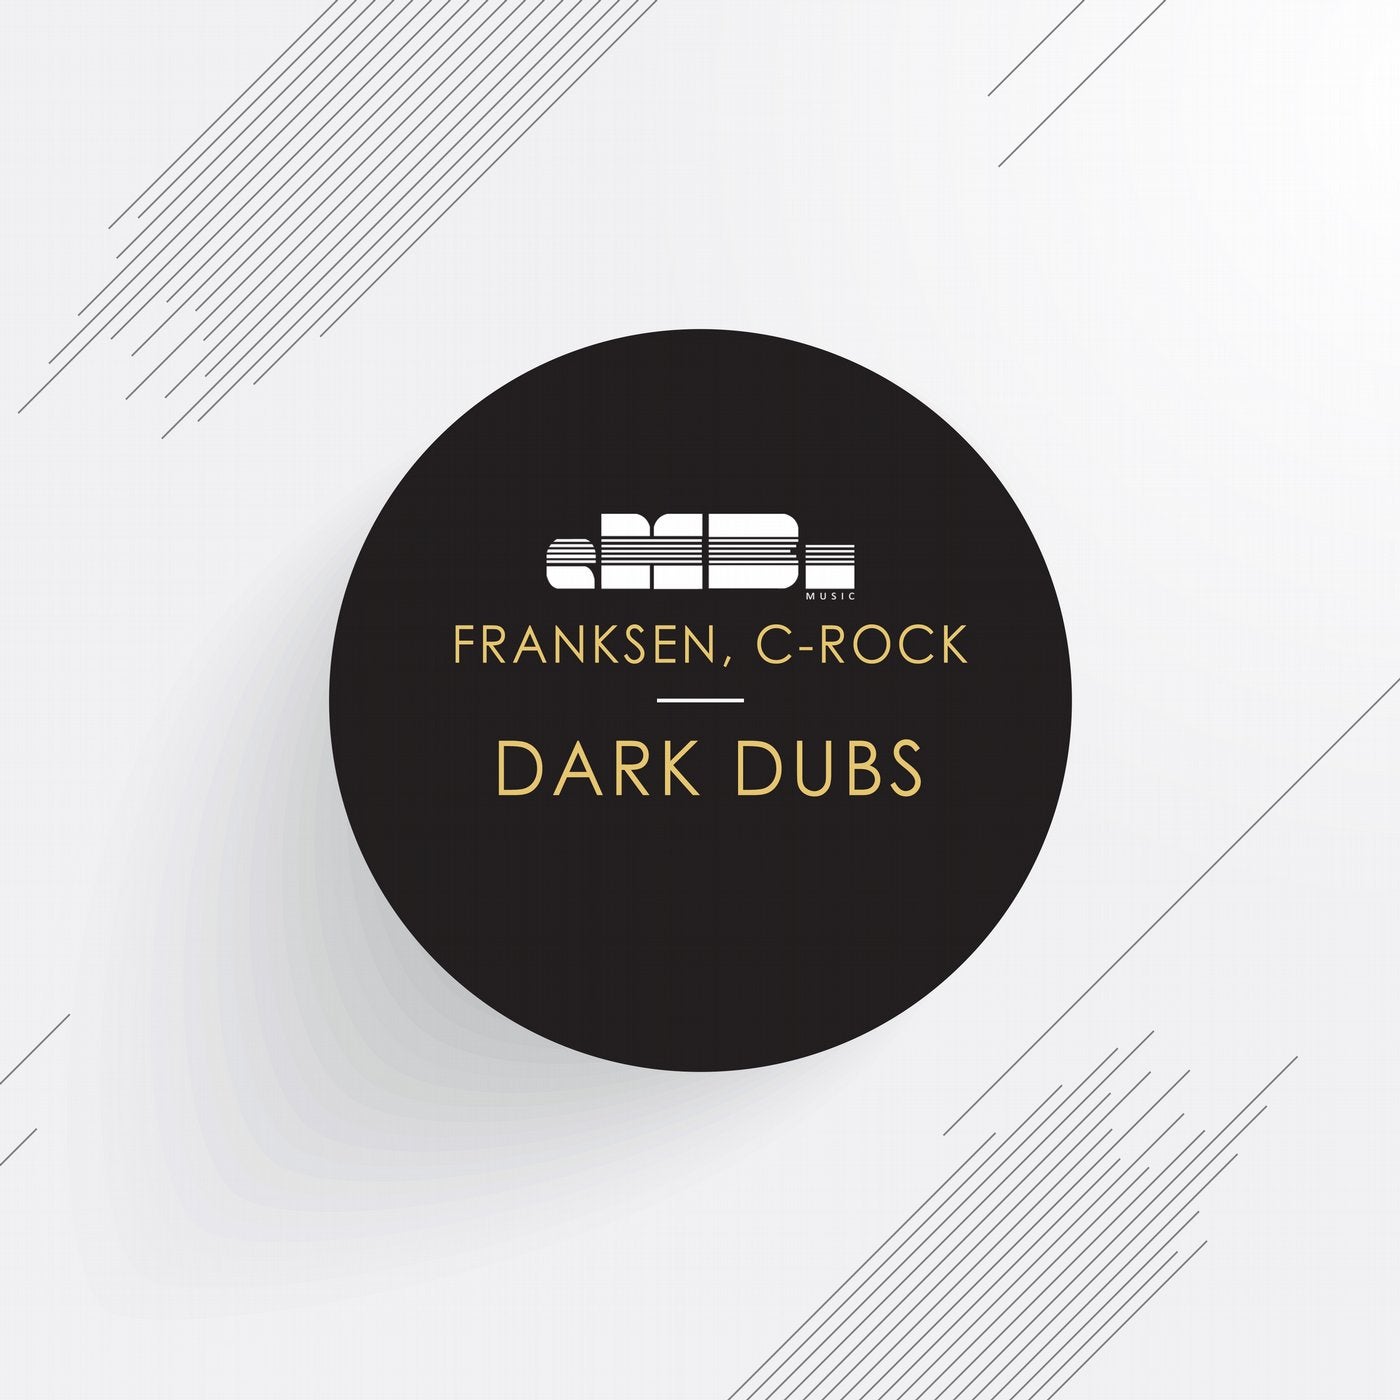 Dark Dubs